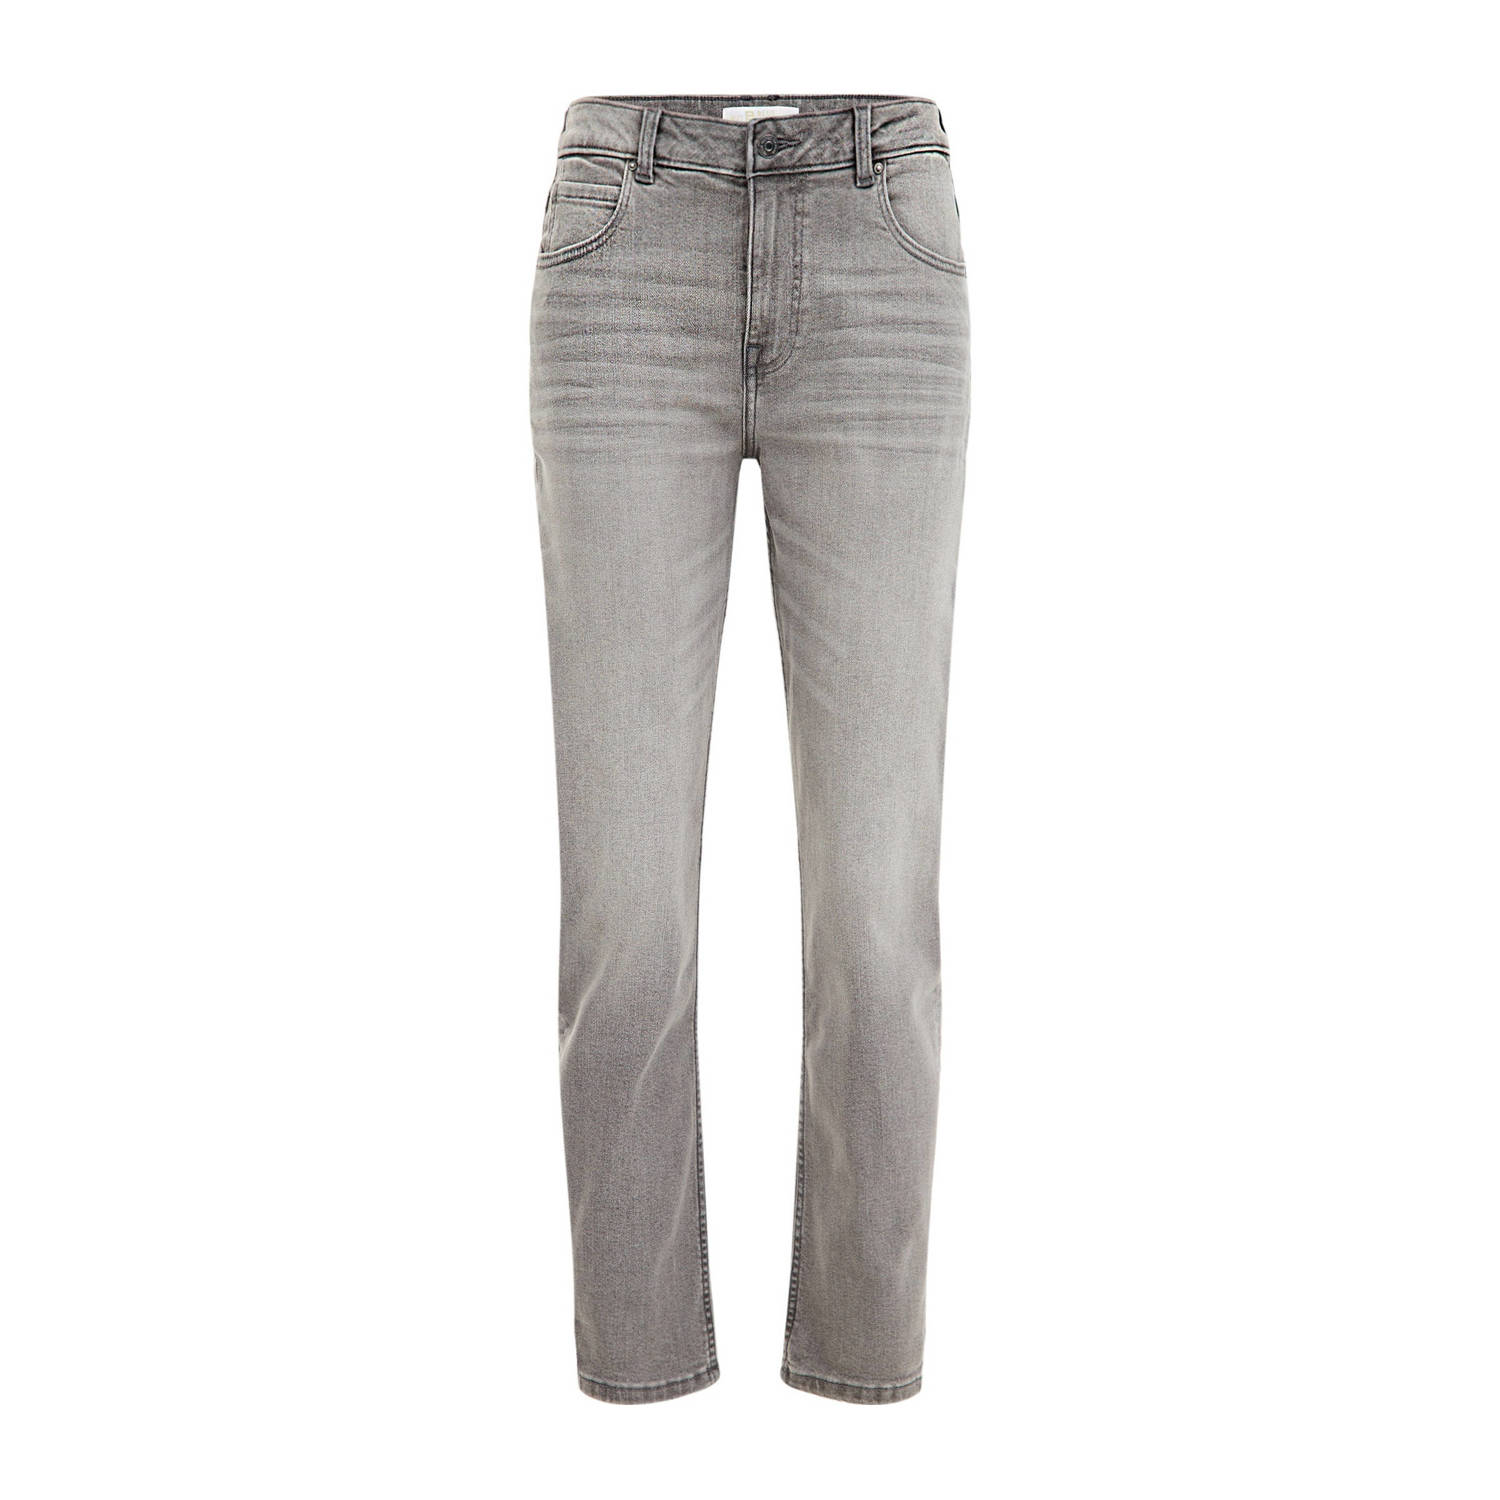 WE Fashion Blue Ridge tapered jeans grey denim